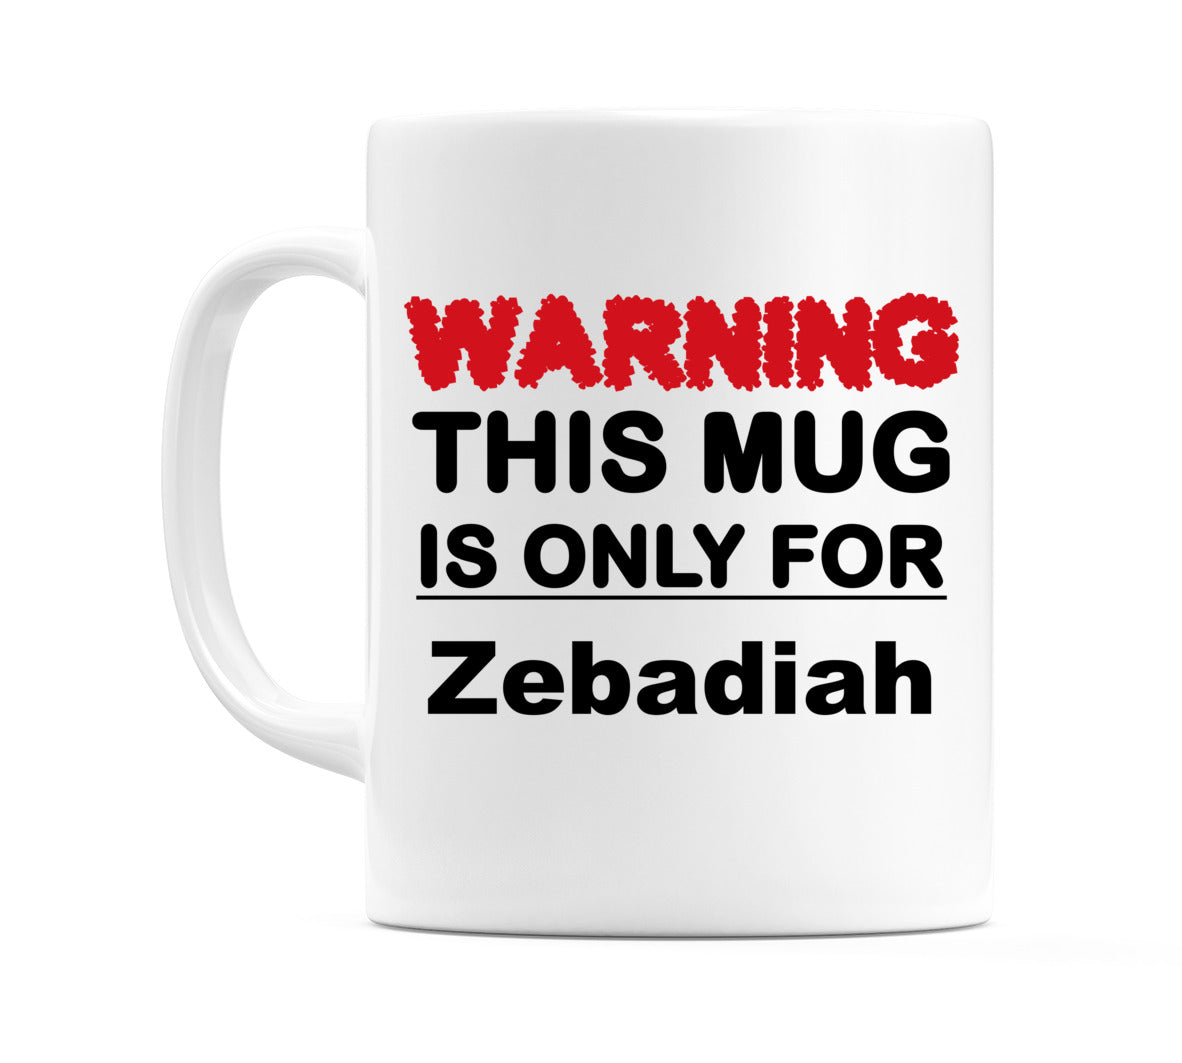 Warning This Mug is ONLY for Zebadiah Mug